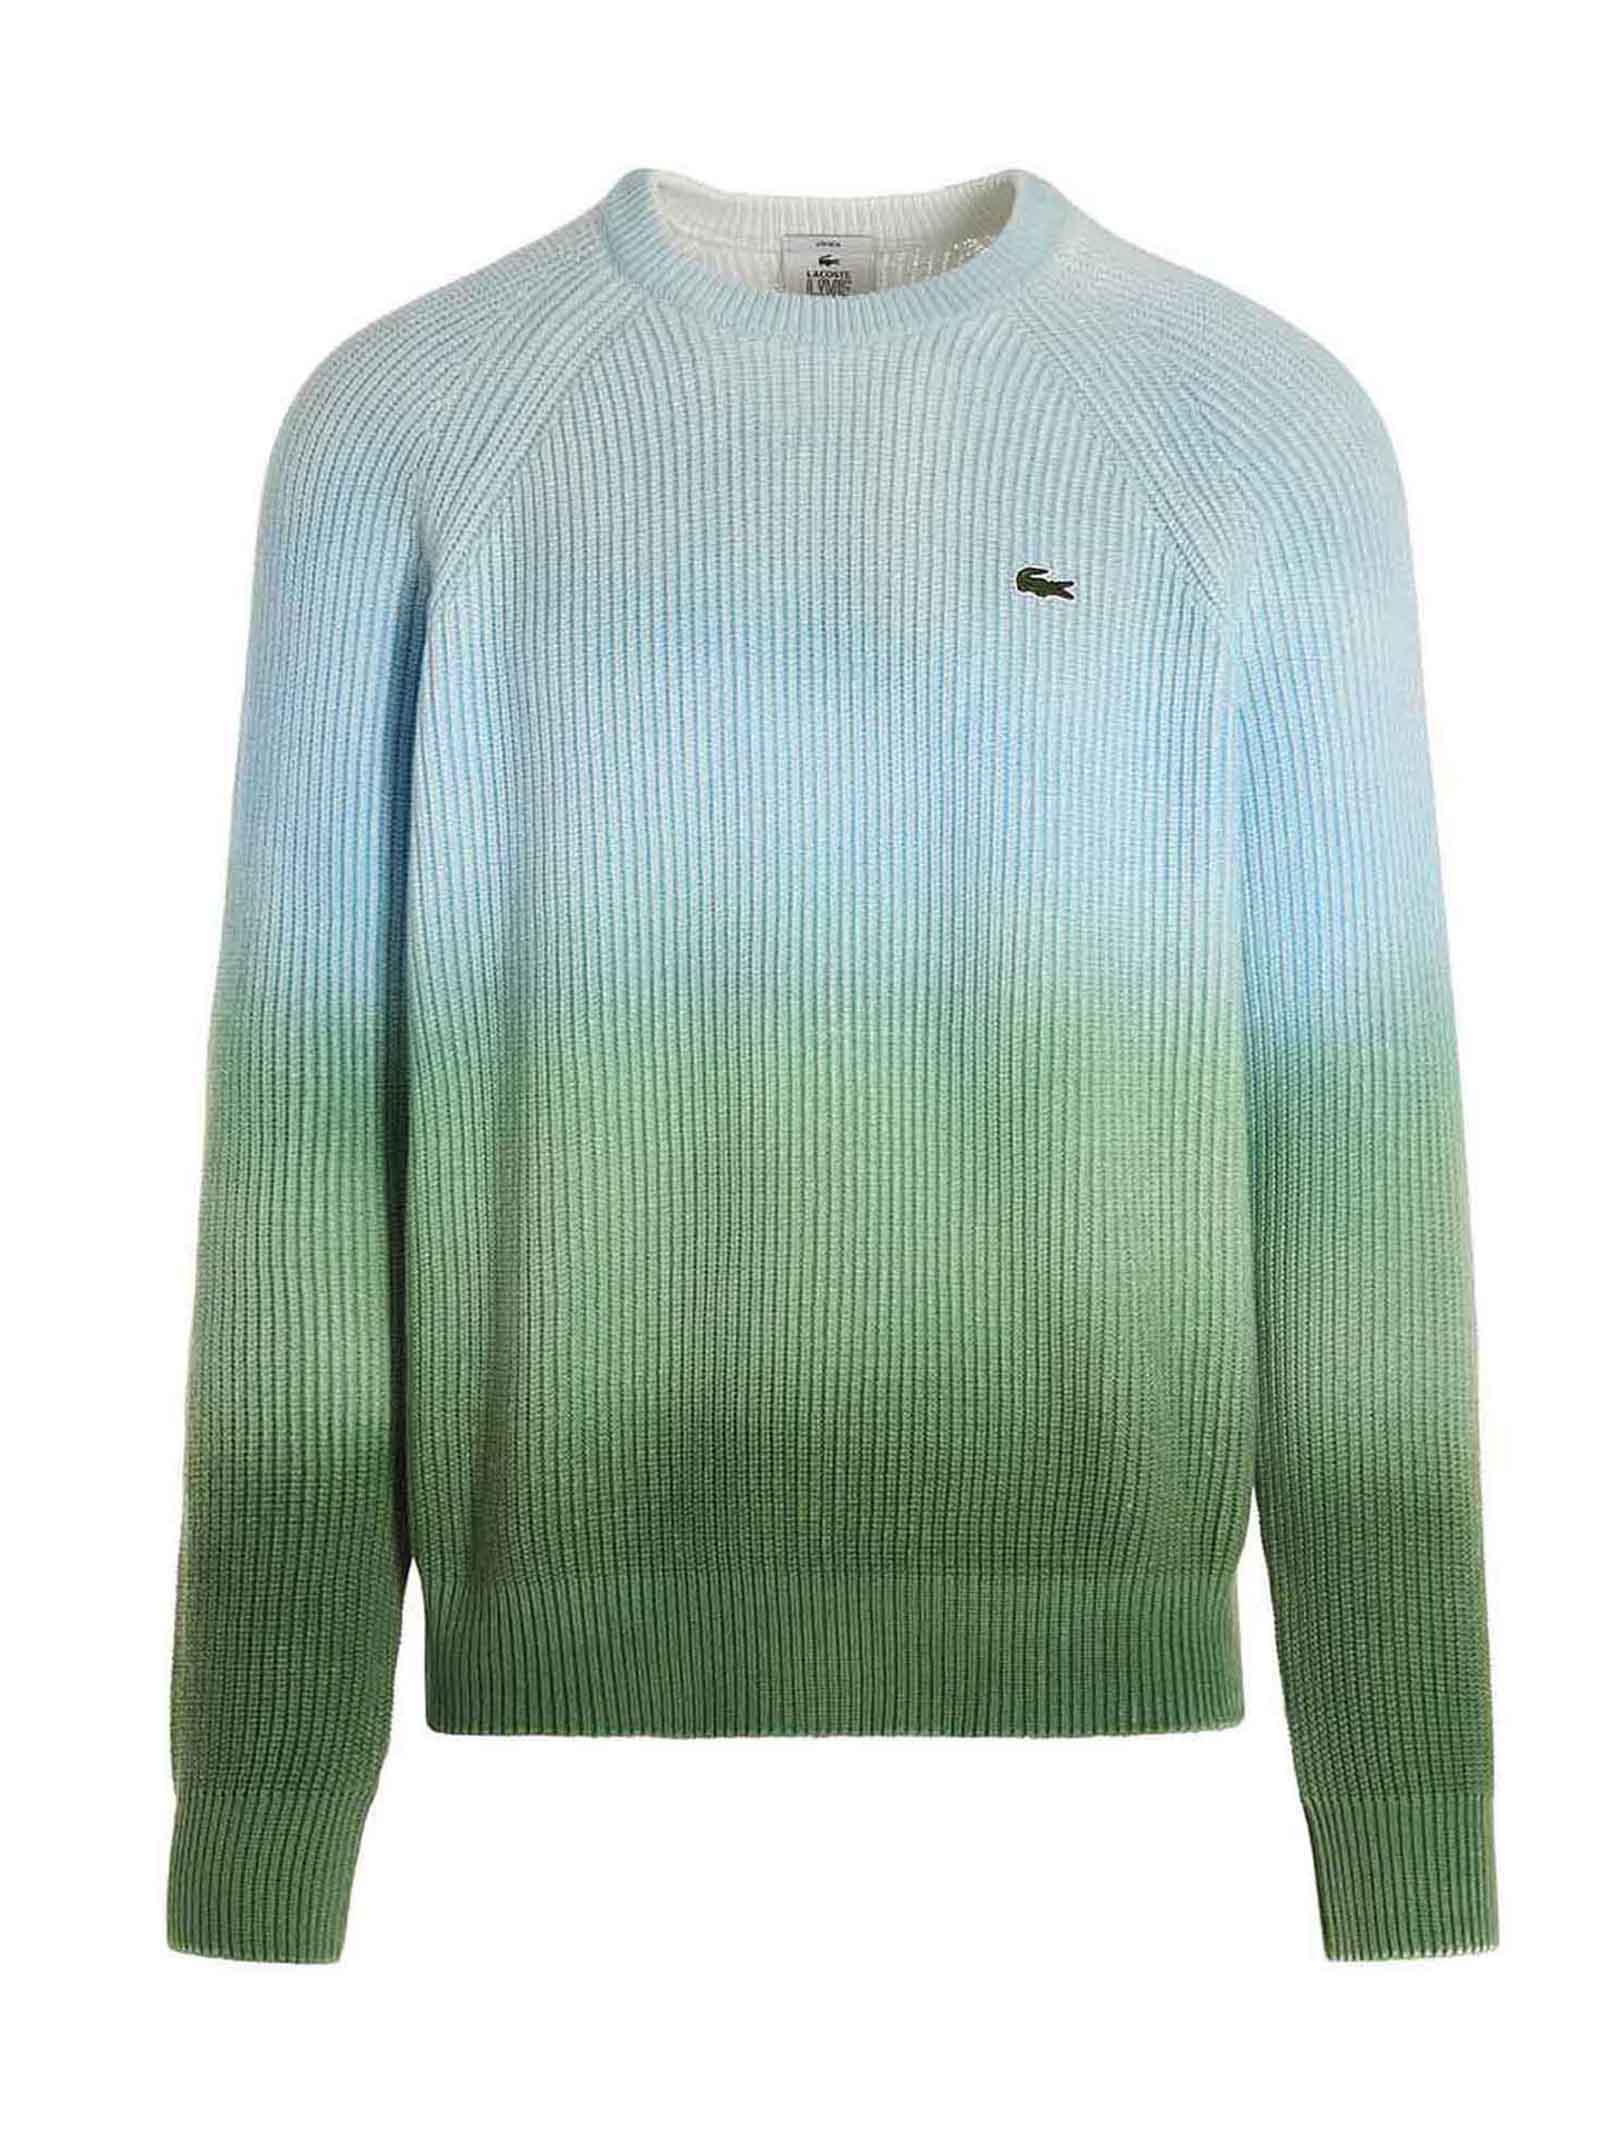 Lacoste L!VE Degradé Effect Sweater